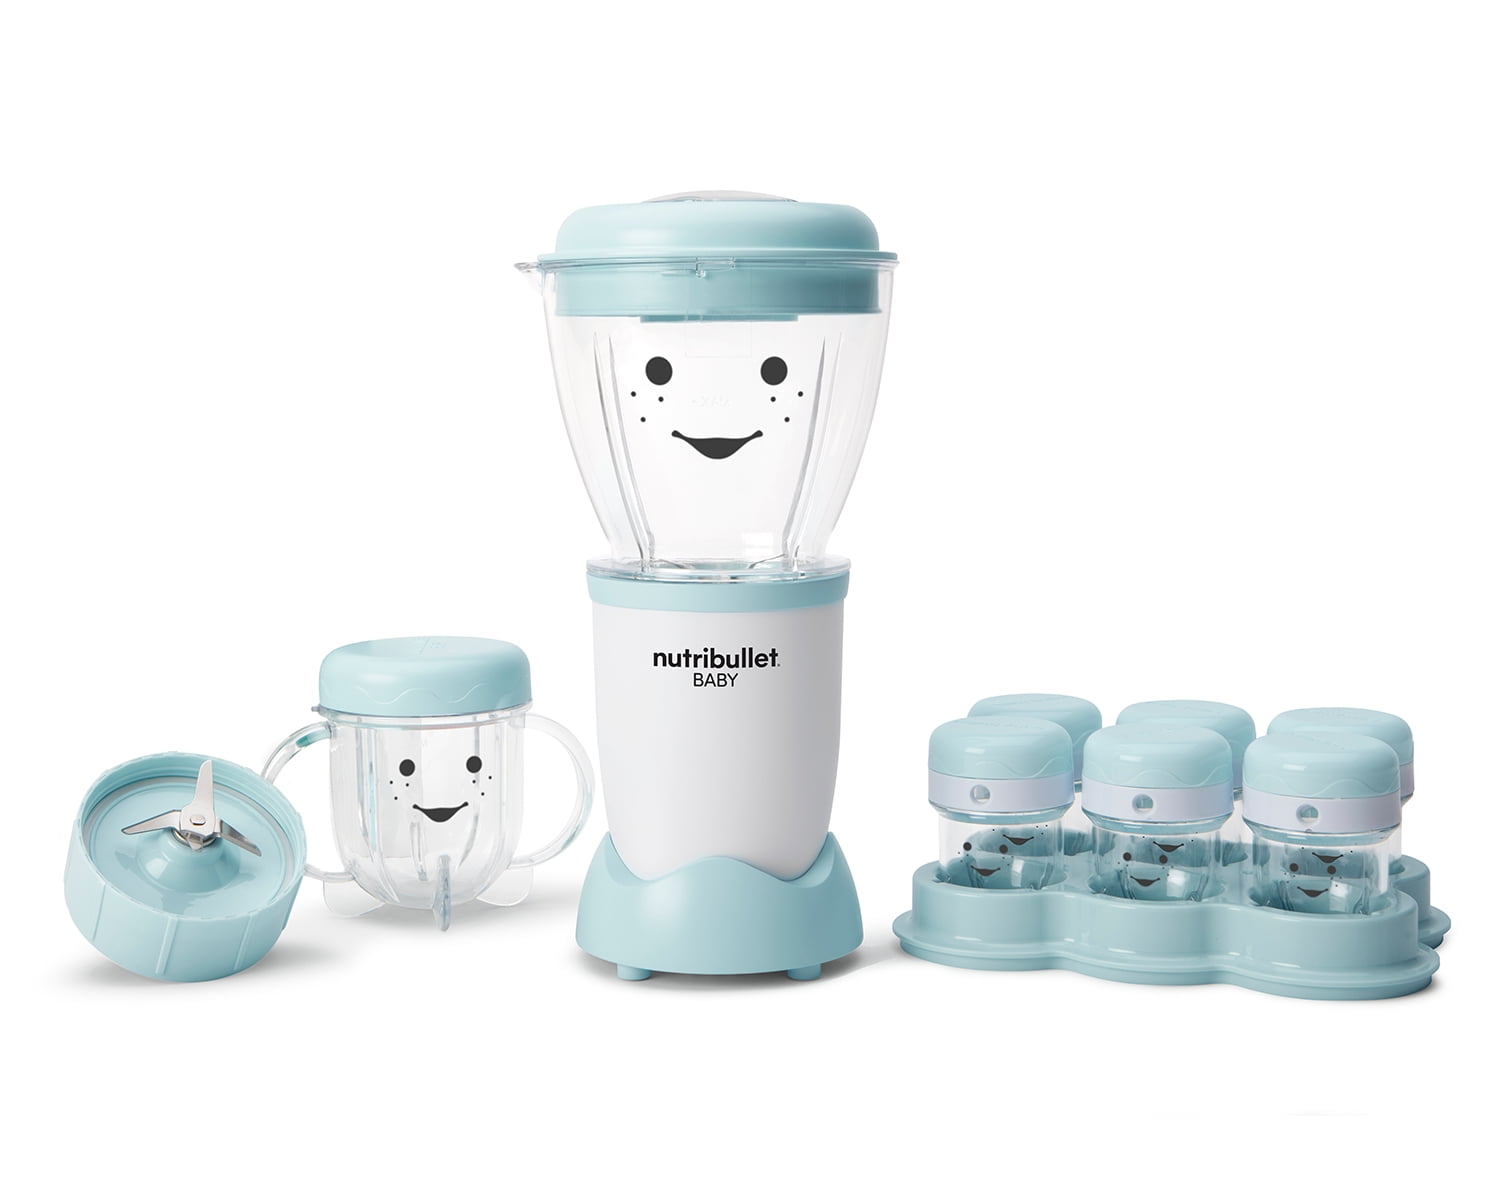 Rent Baby Gear INCLUDING nutribullet Personal Blender for Shakes